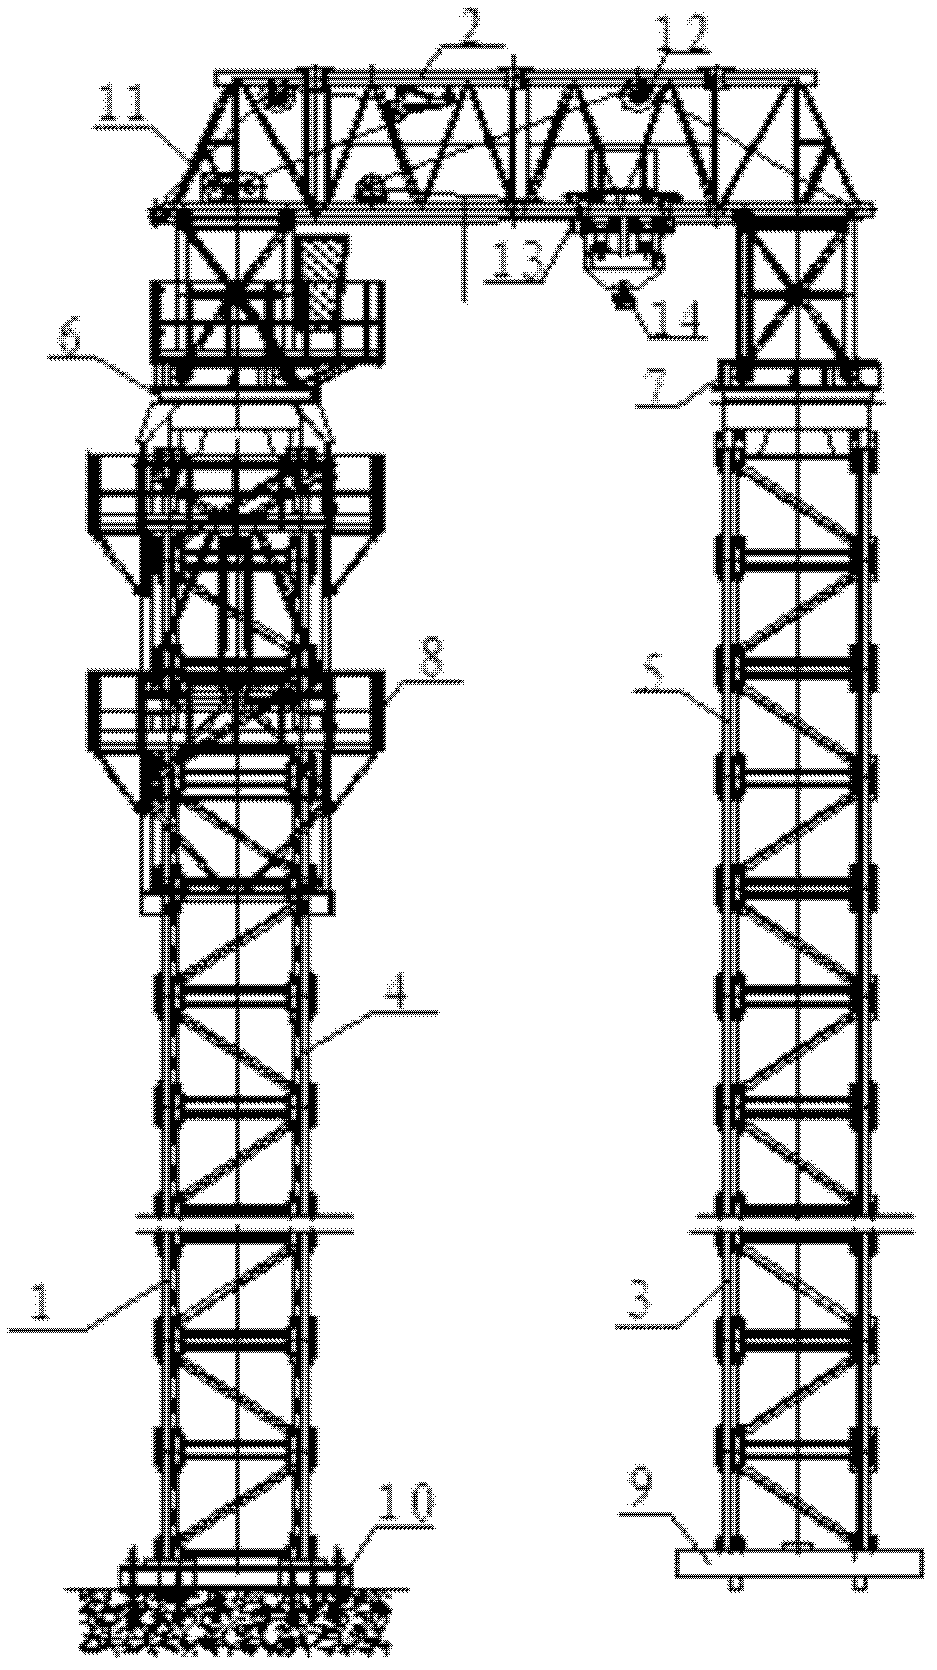 Twin-tower type crane